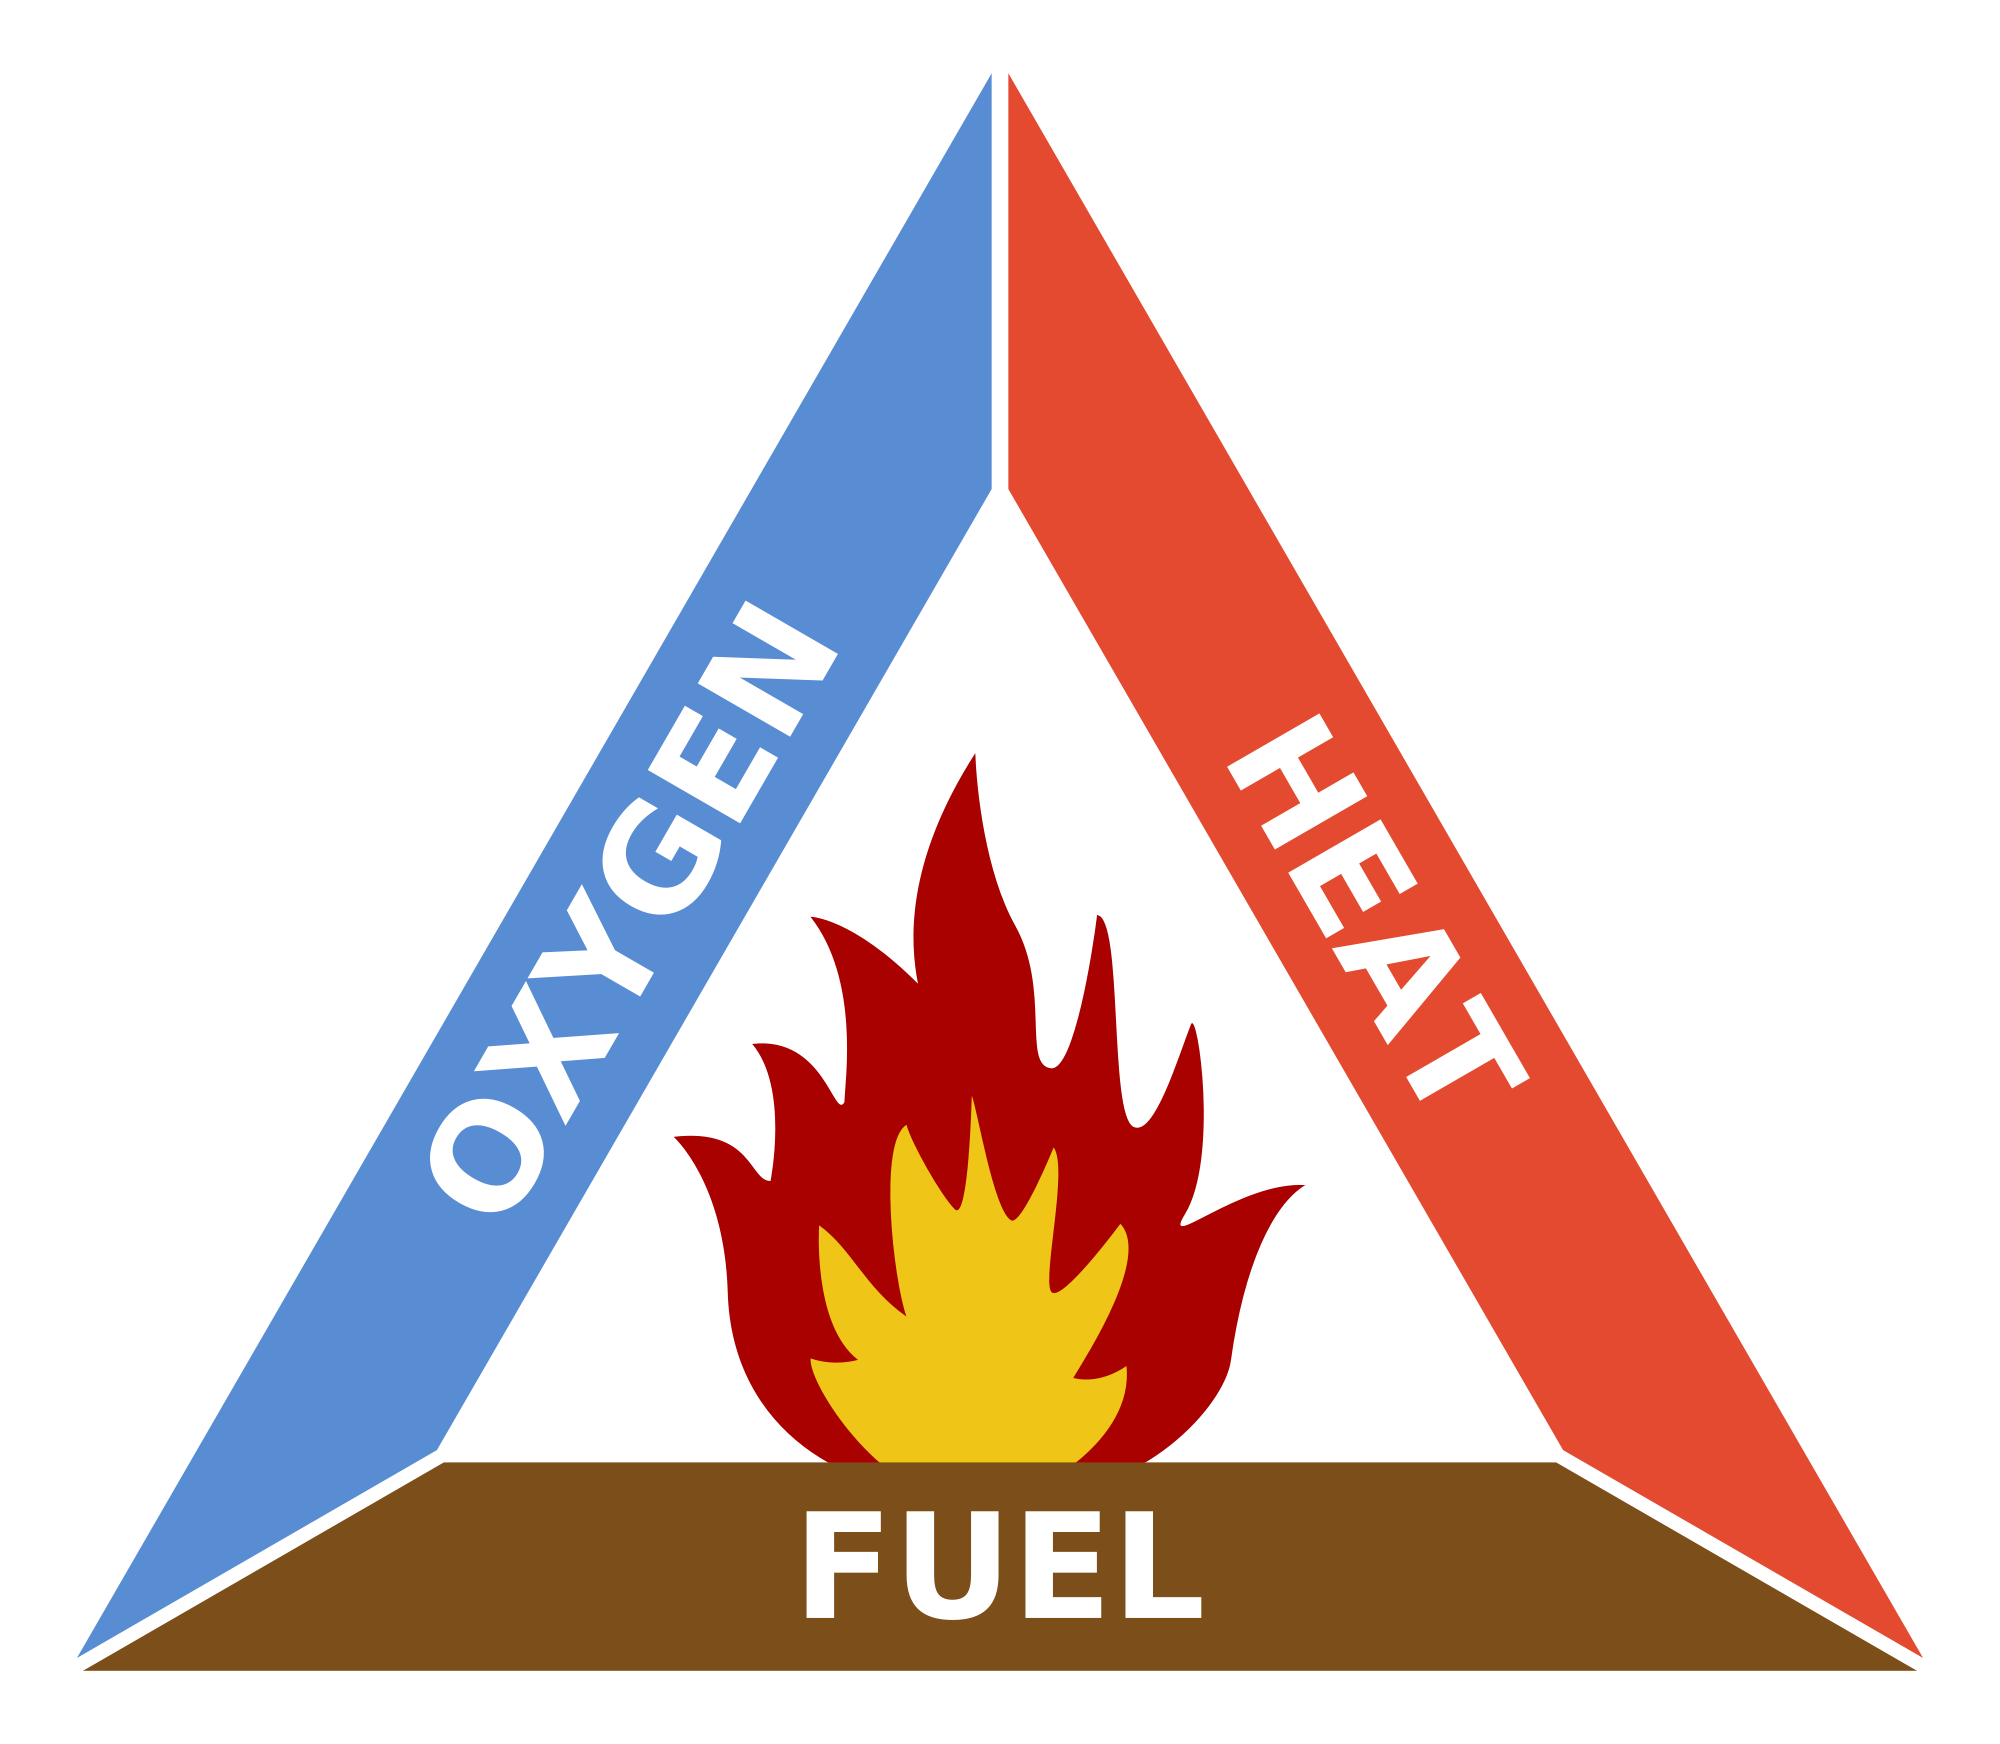 Fire triangle - Wikipedia, the free encyclopedia